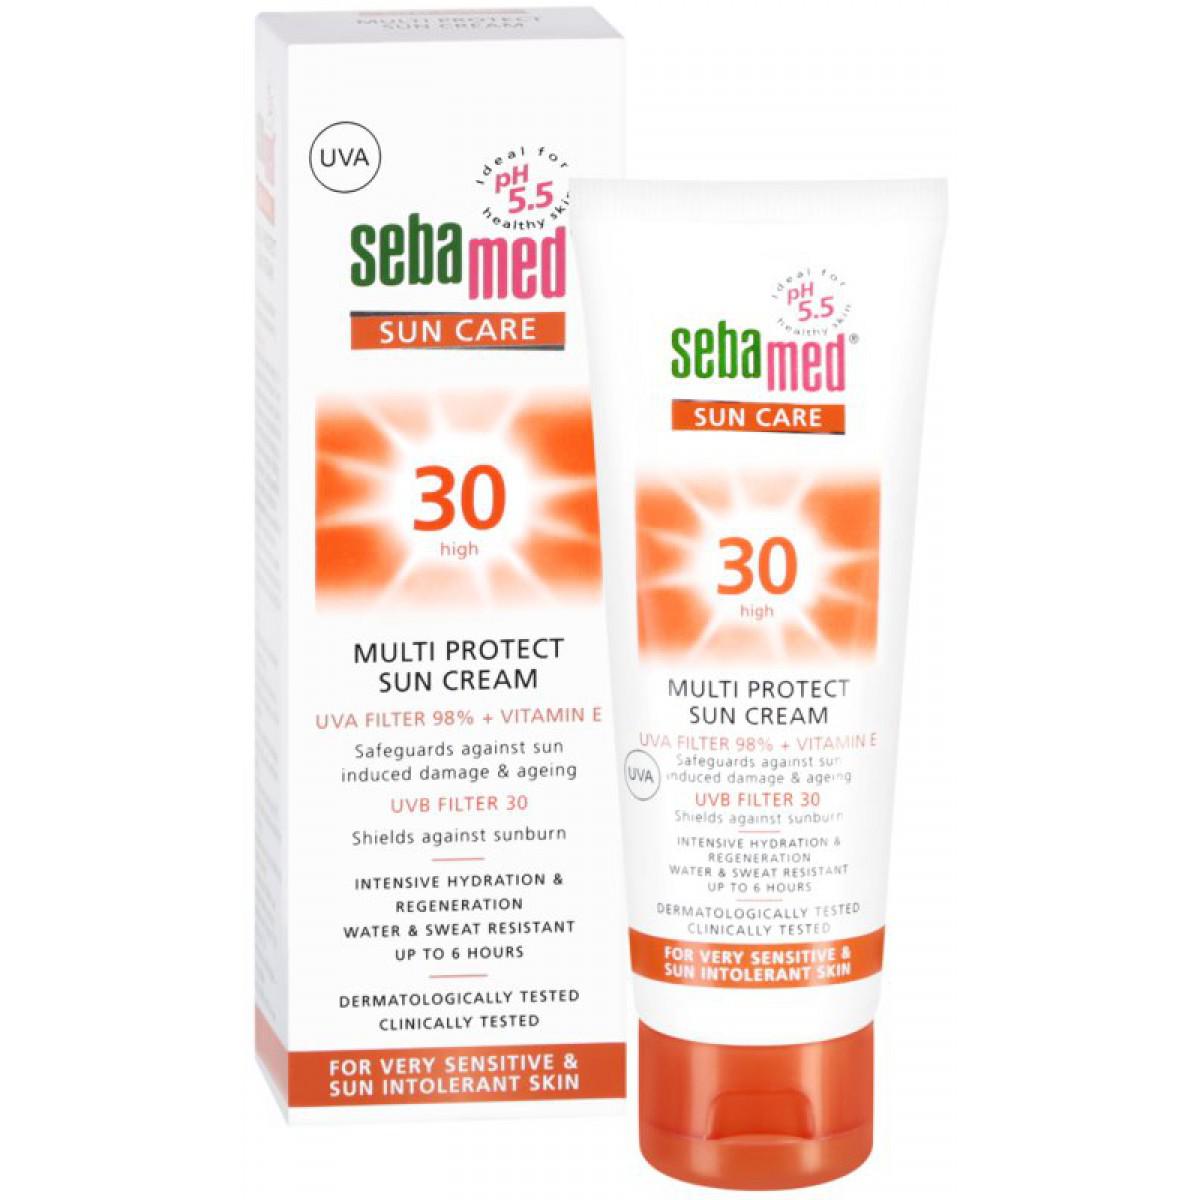 Kem chống nắng cho da nhạy cảm Sebamed pH5.5 Sun Care Multi Protect Sun Cream SPF 50+ 75ml